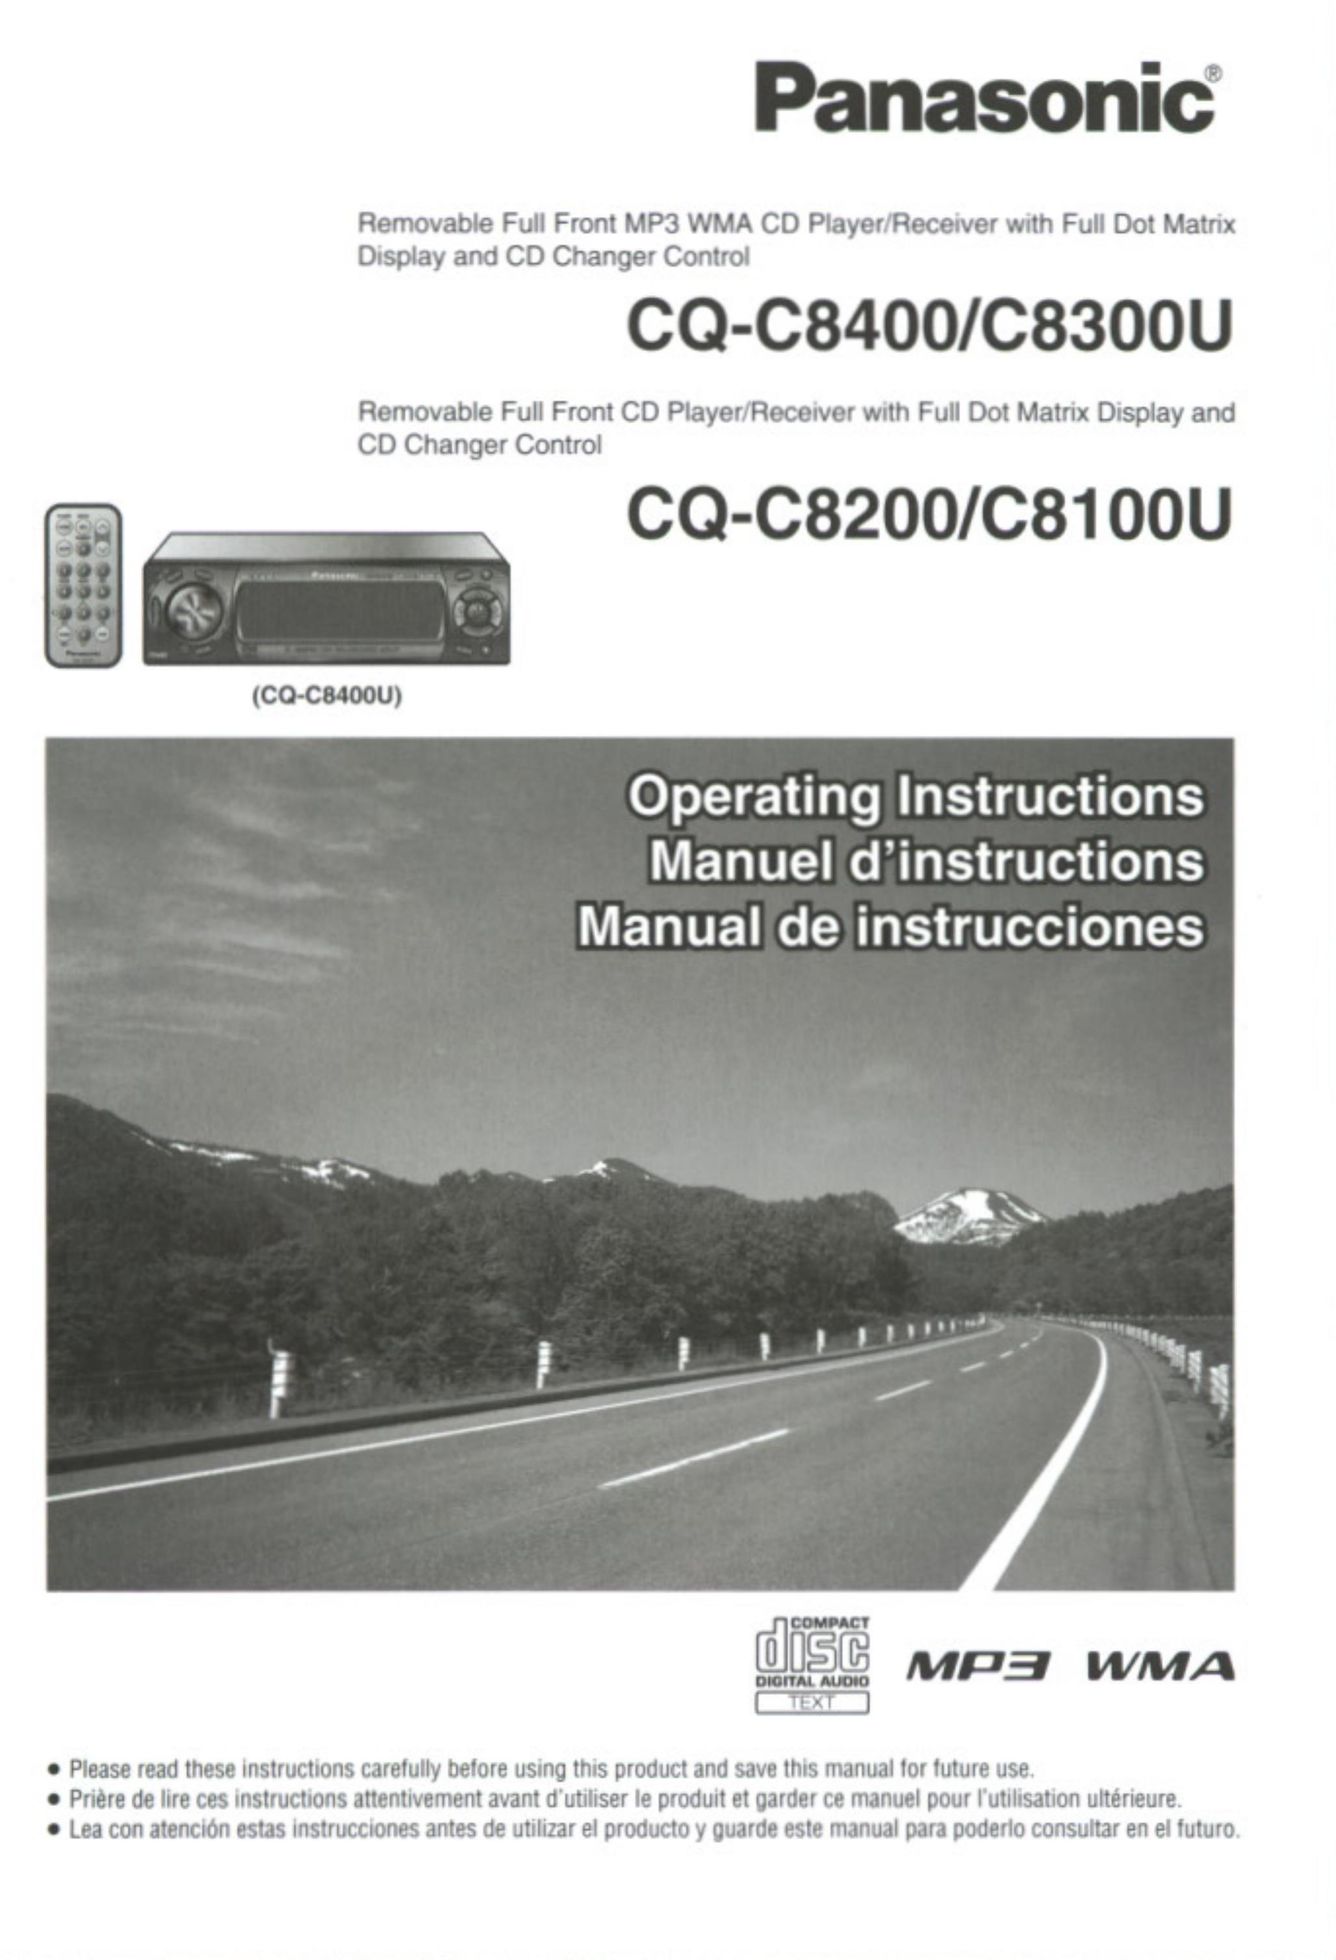 Panasonic CQ-C8200 CD Player User Manual